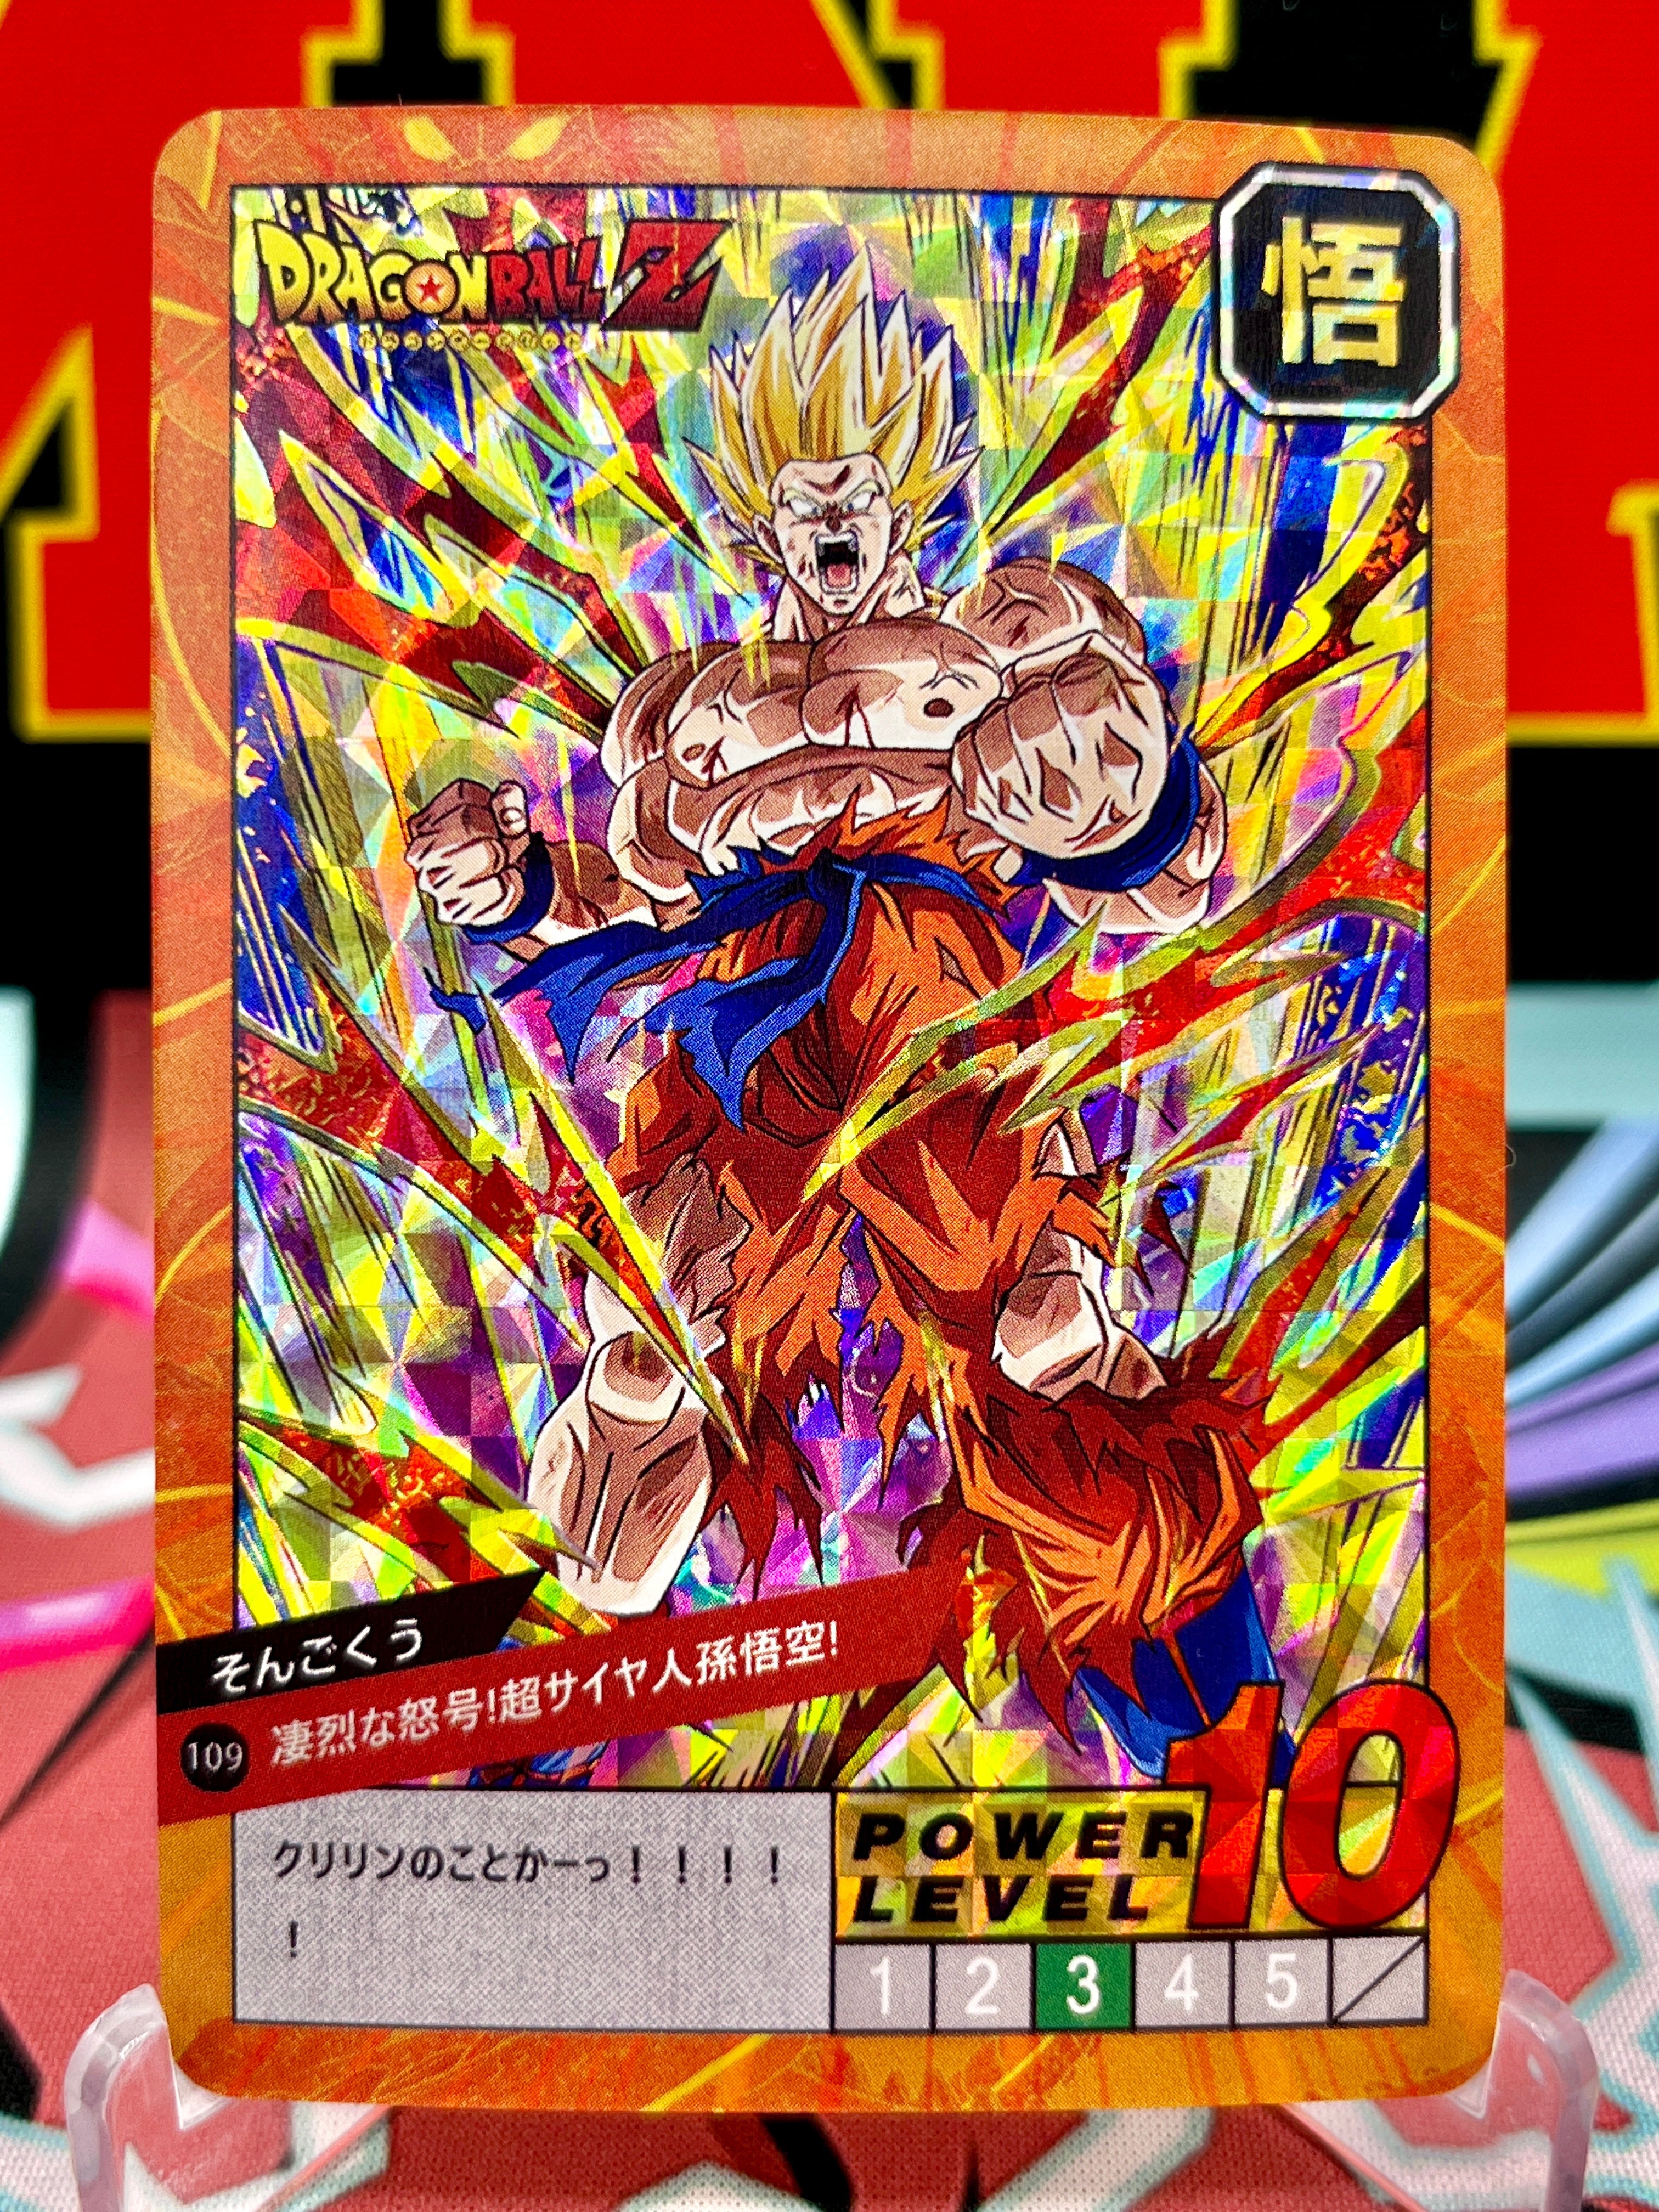 DBCA4-109 Son Goku Art Card